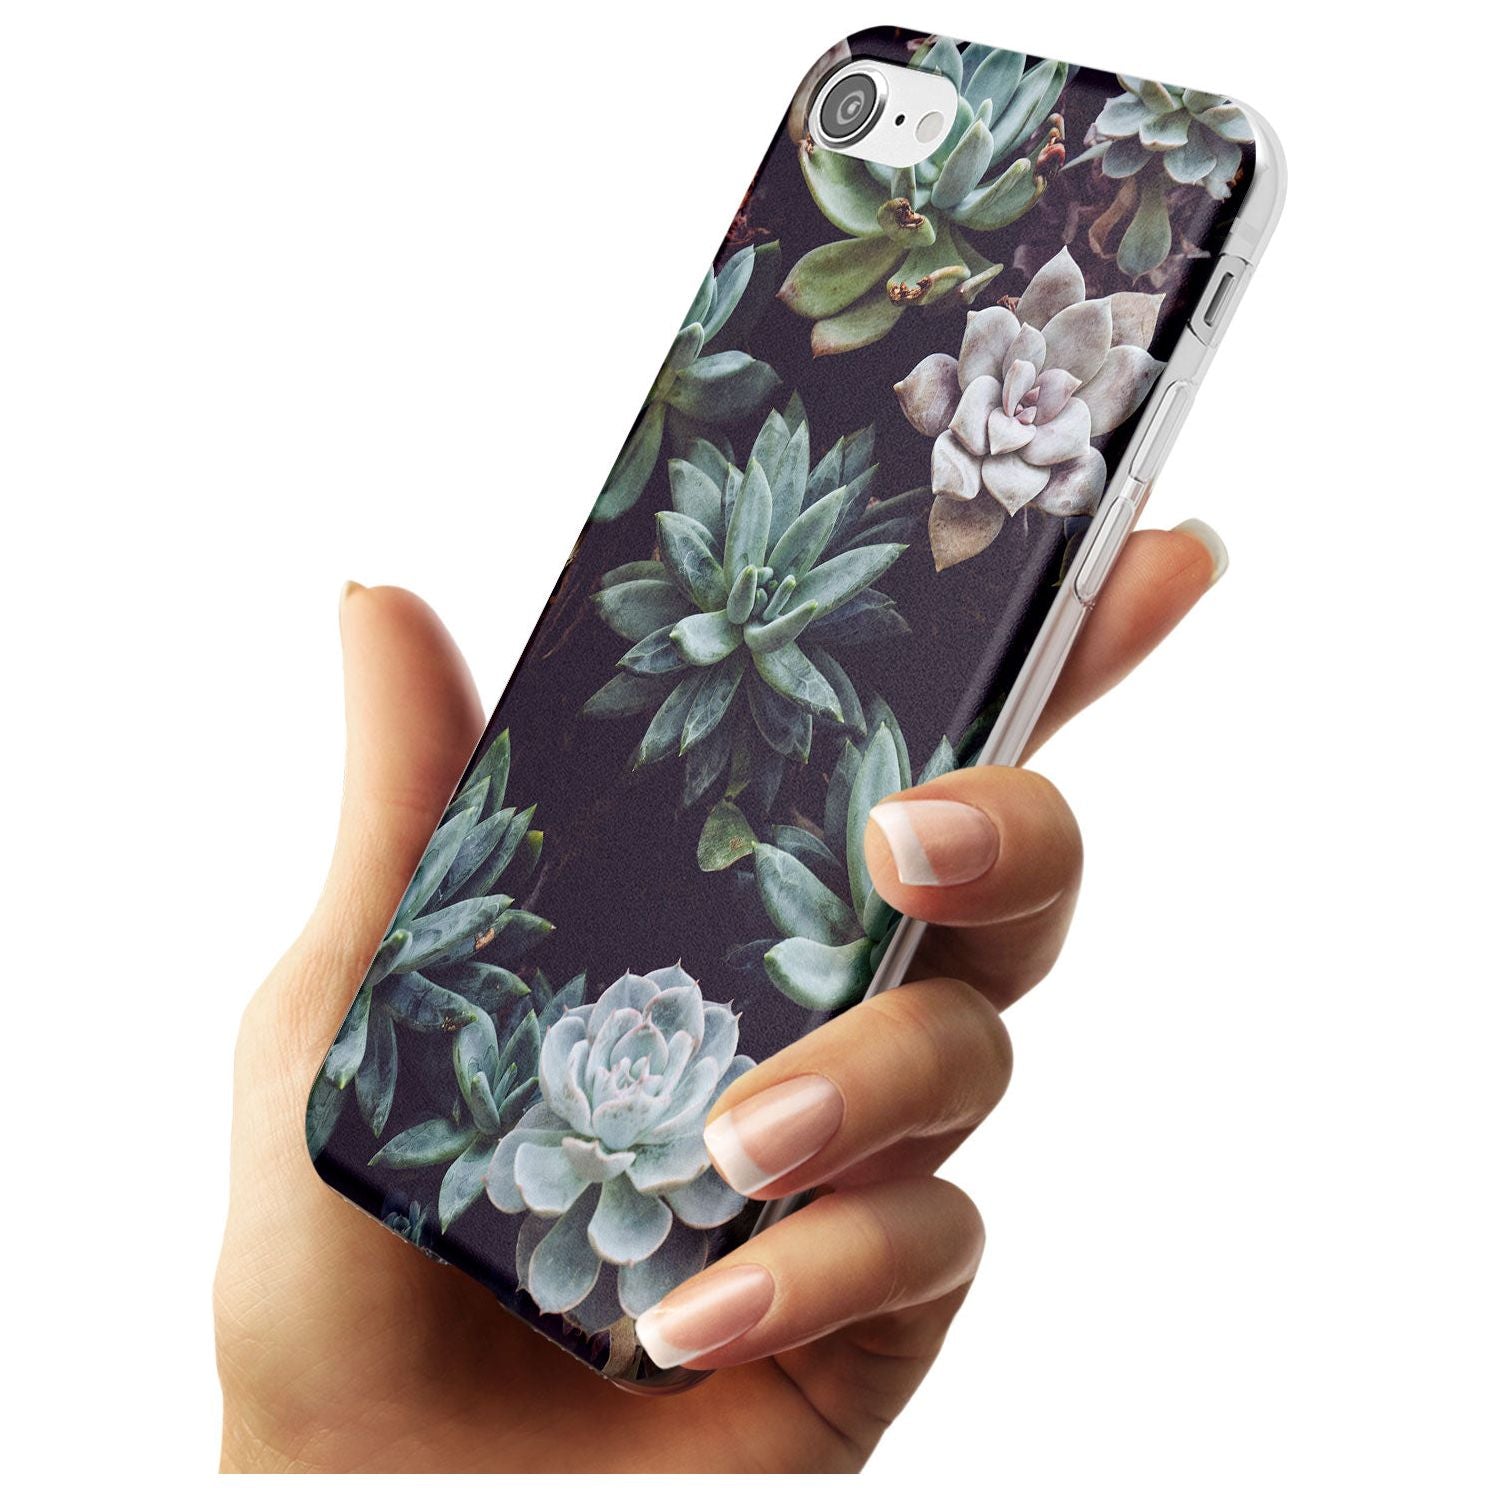 Mixed Succulents - Real Botanical Photographs Slim TPU Phone Case for iPhone SE 8 7 Plus